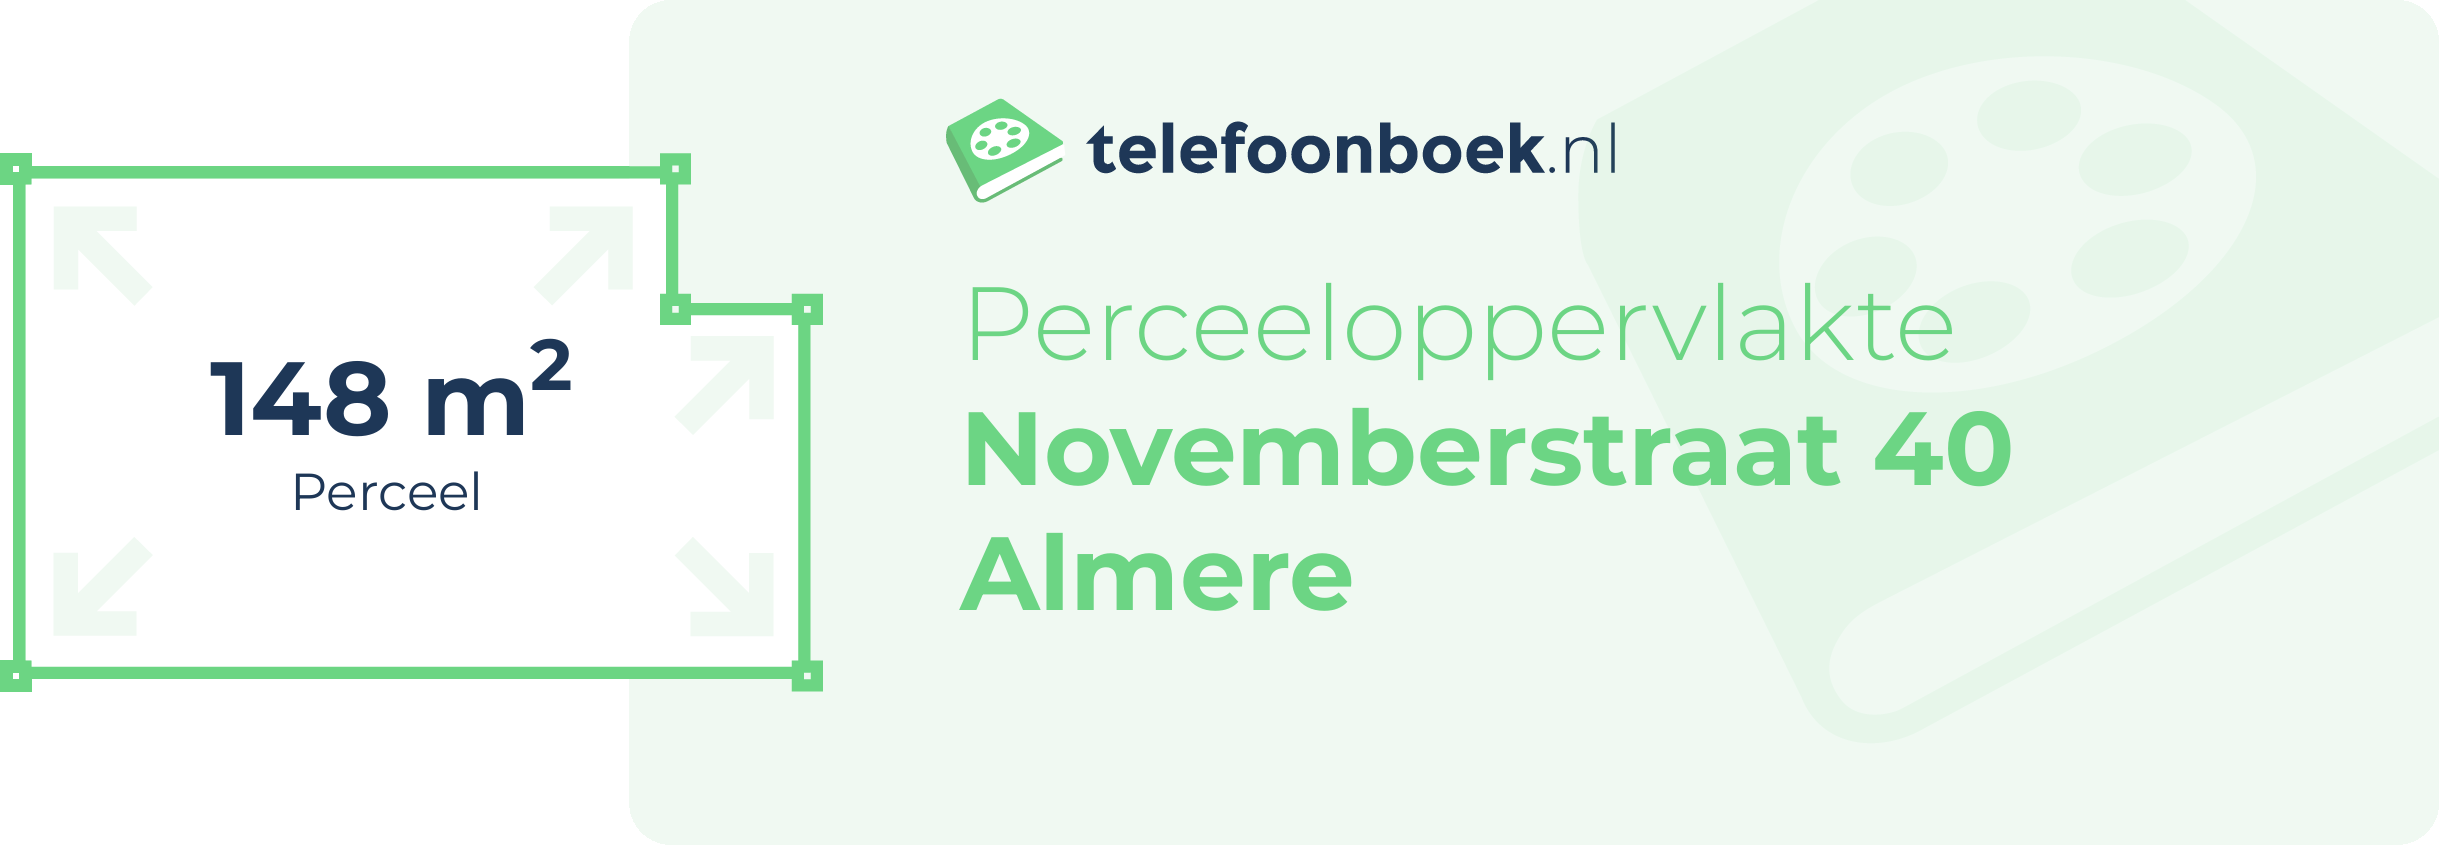 Perceeloppervlakte Novemberstraat 40 Almere